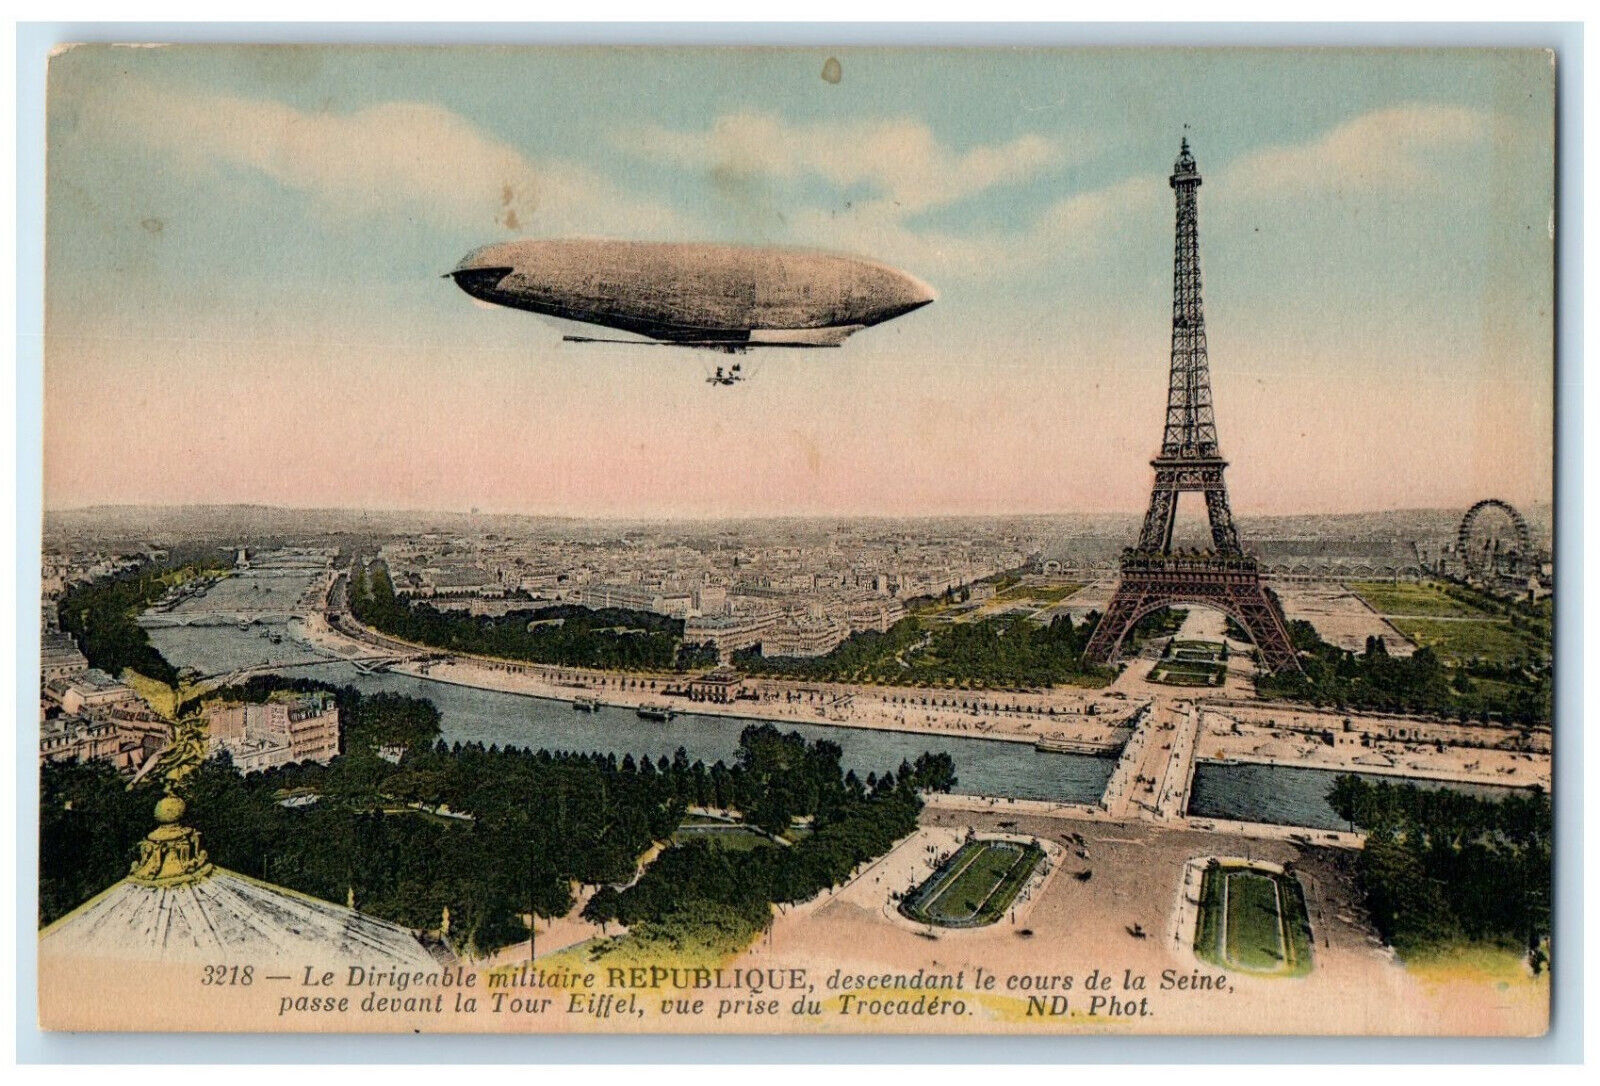 c1910 Military Airship Dirigible Republique Eiffel Tower Paris France Postcard